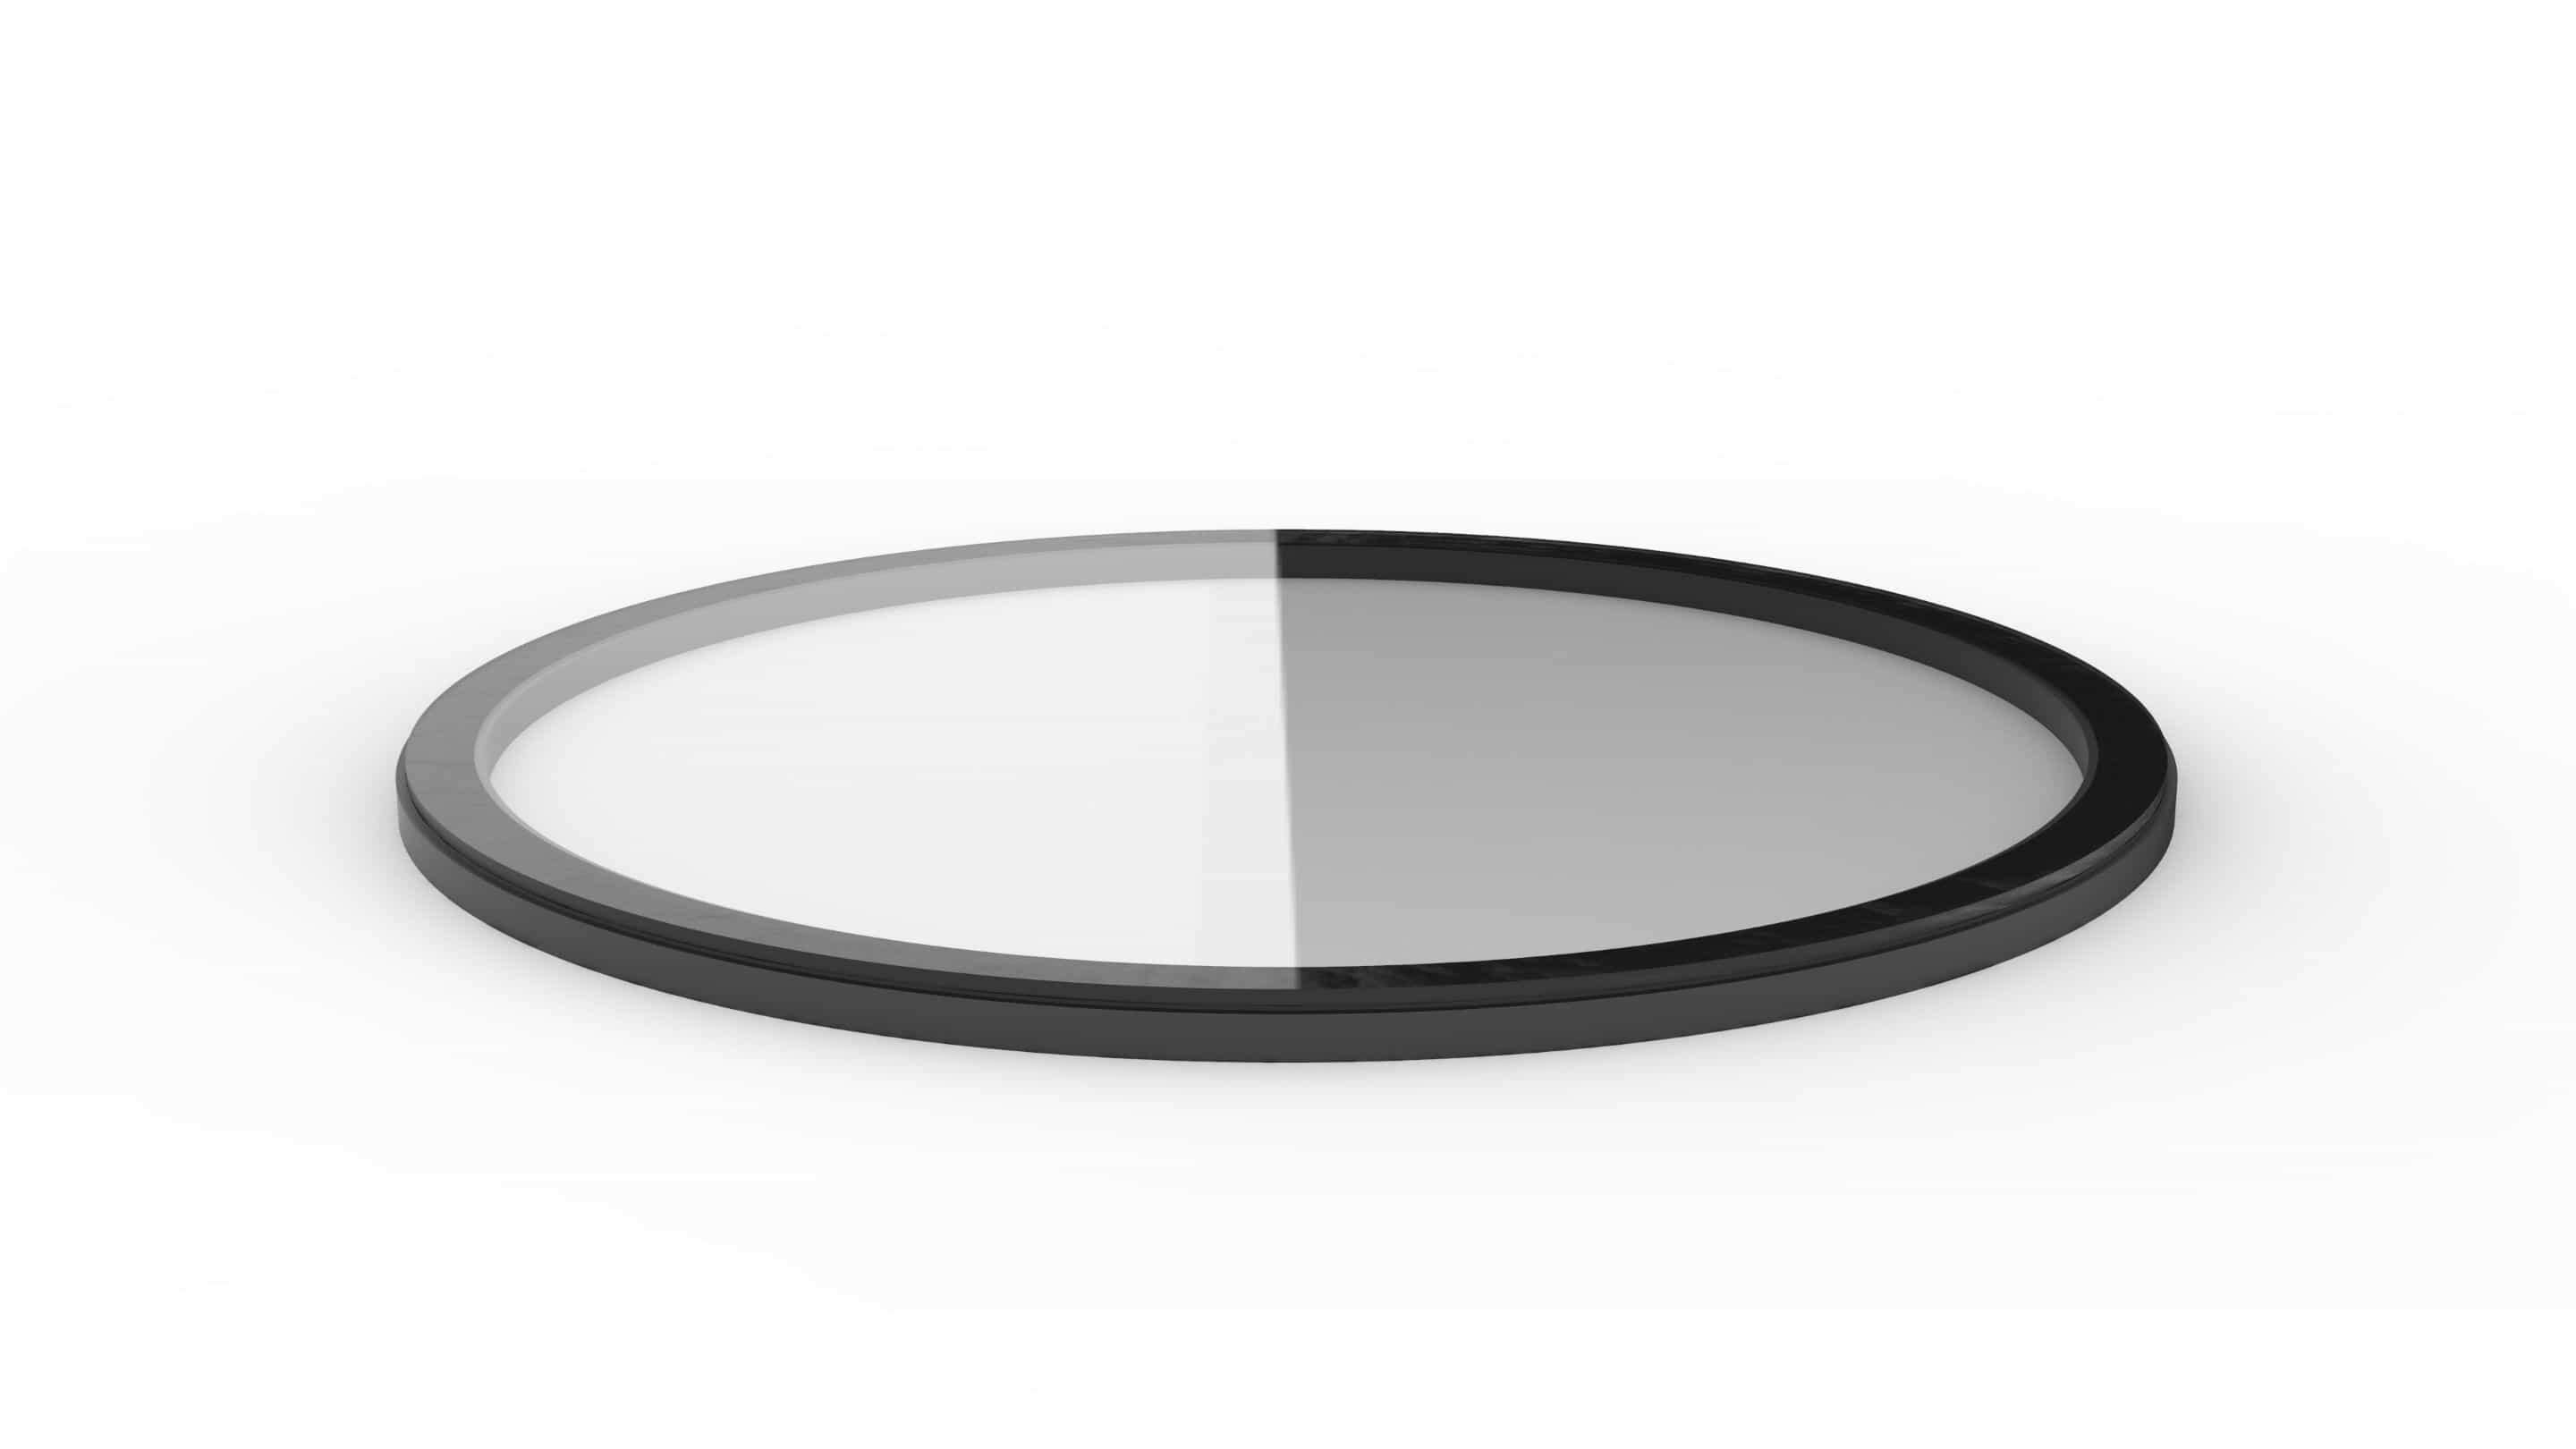 Impactinator® Vidro - Cola vidro no anel de alumínio, um objeto circular preto e branco